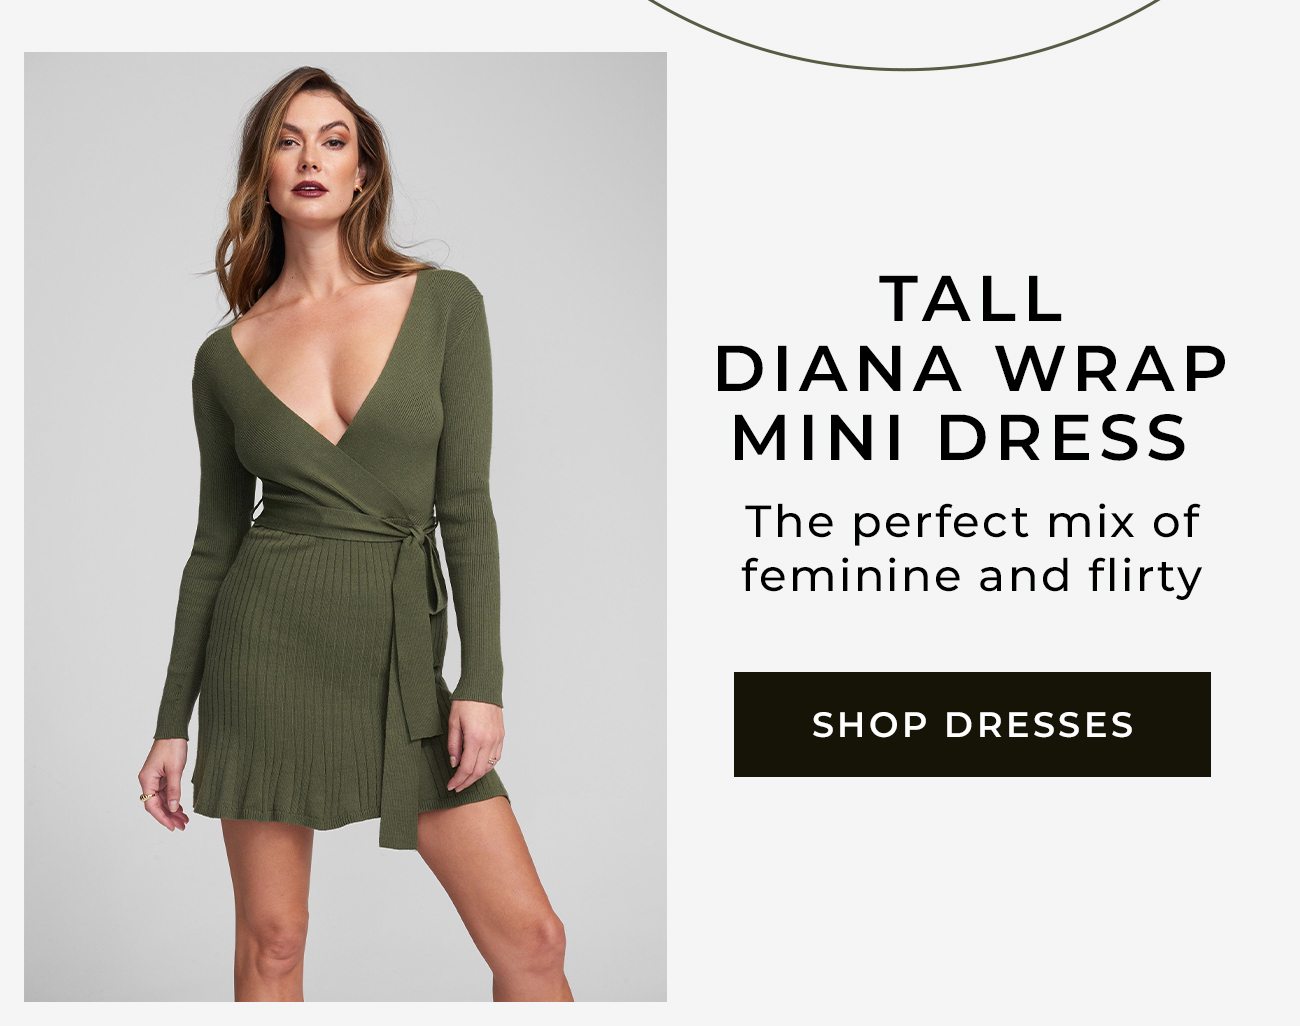 Tall Diana Wrap Mini Dress - The perfect mix of feminine and flirty 